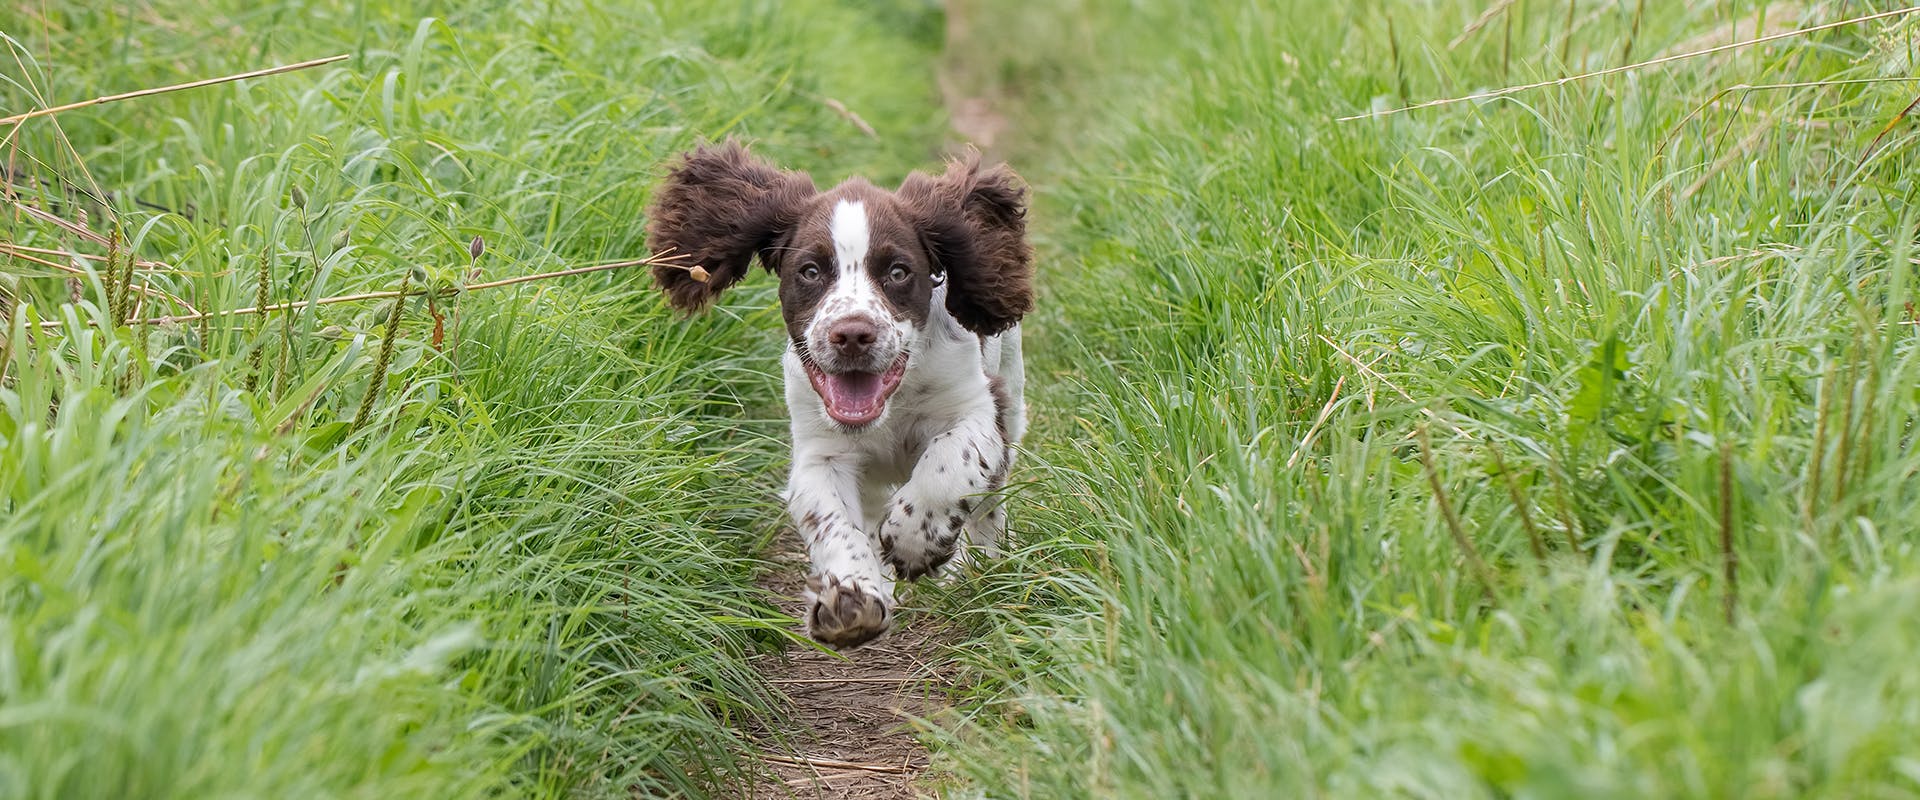 A cute Sprocker Spaniel puppy running through grass